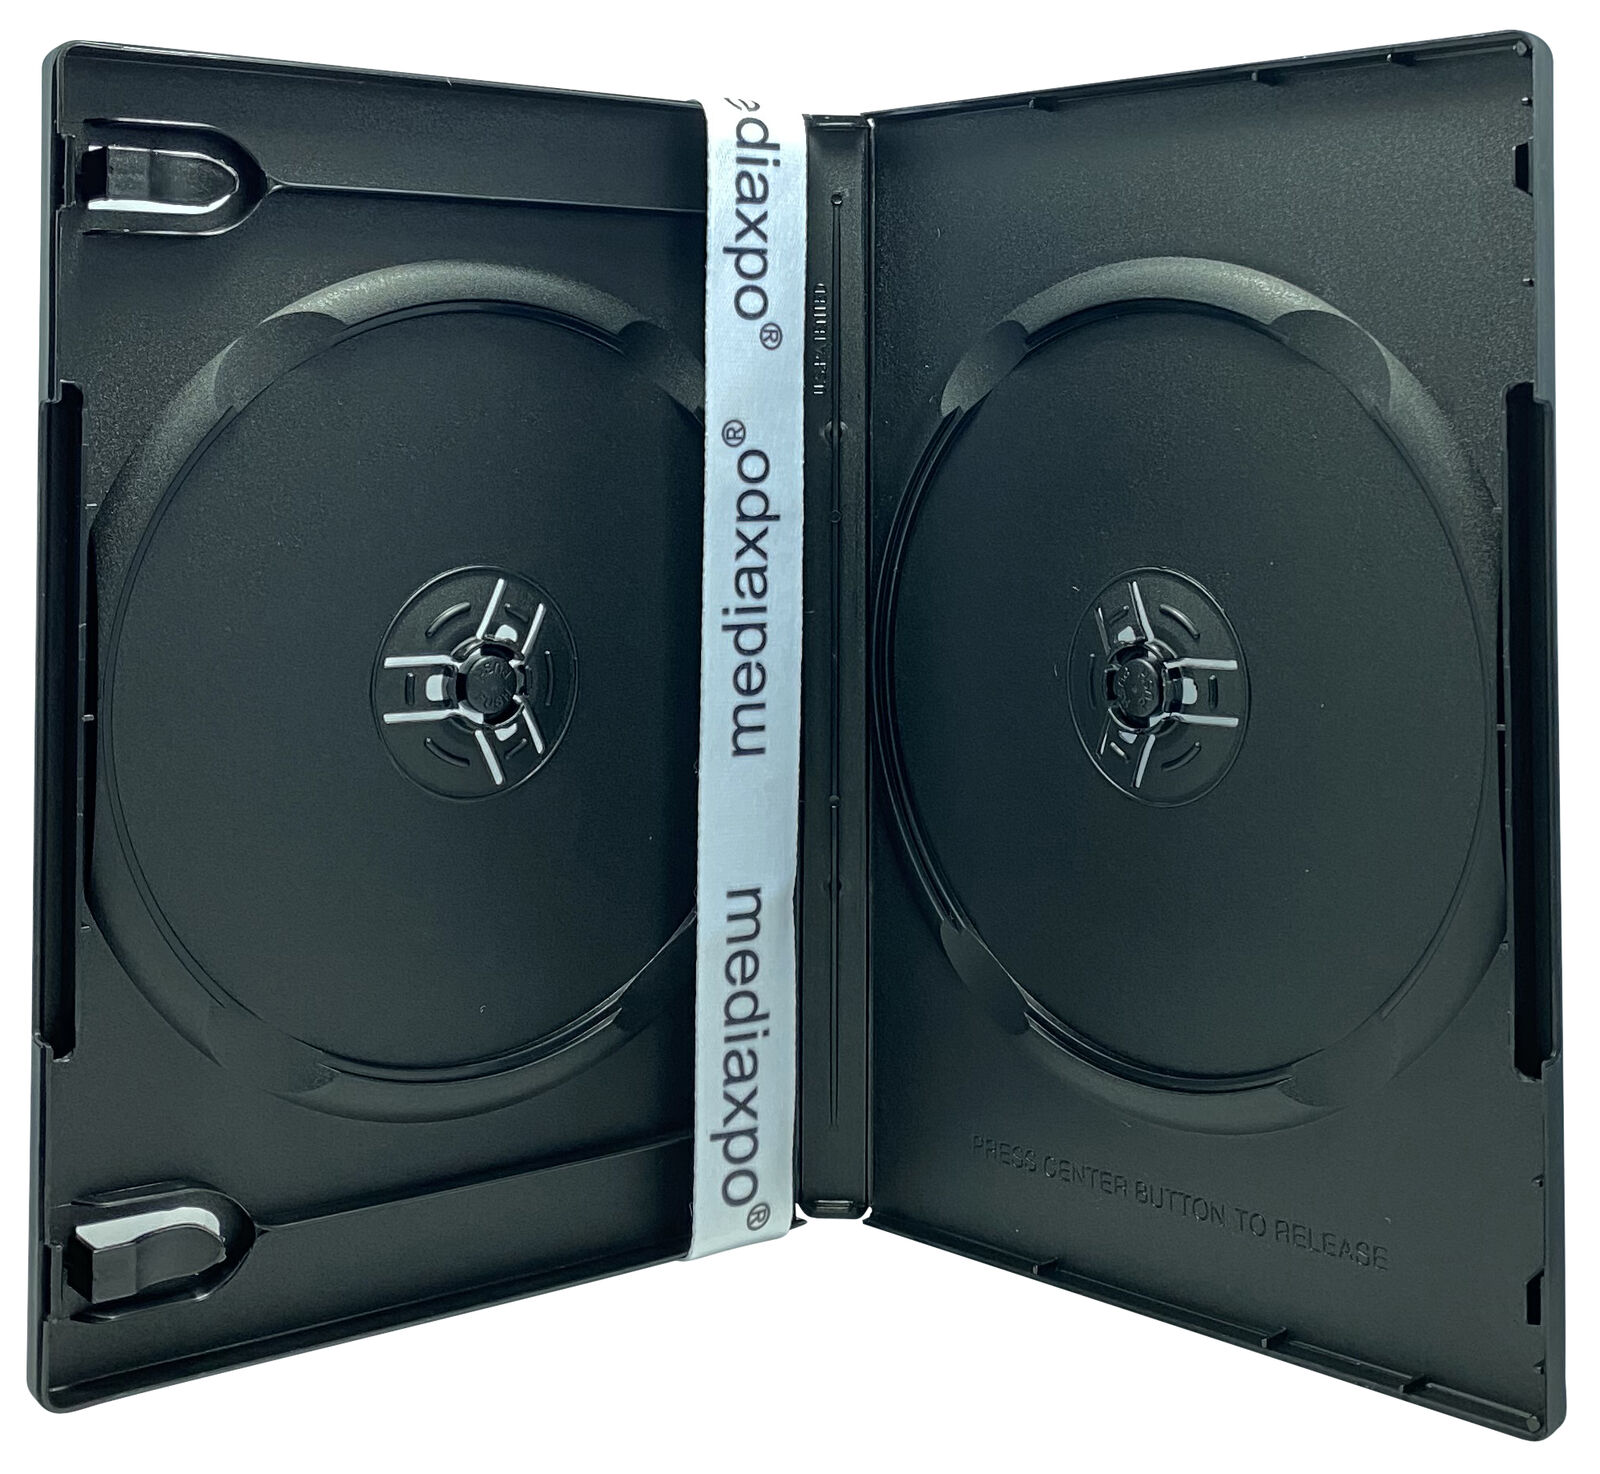 PREMIUM STANDARD Black Double DVD Cases (100% New Material) Lot